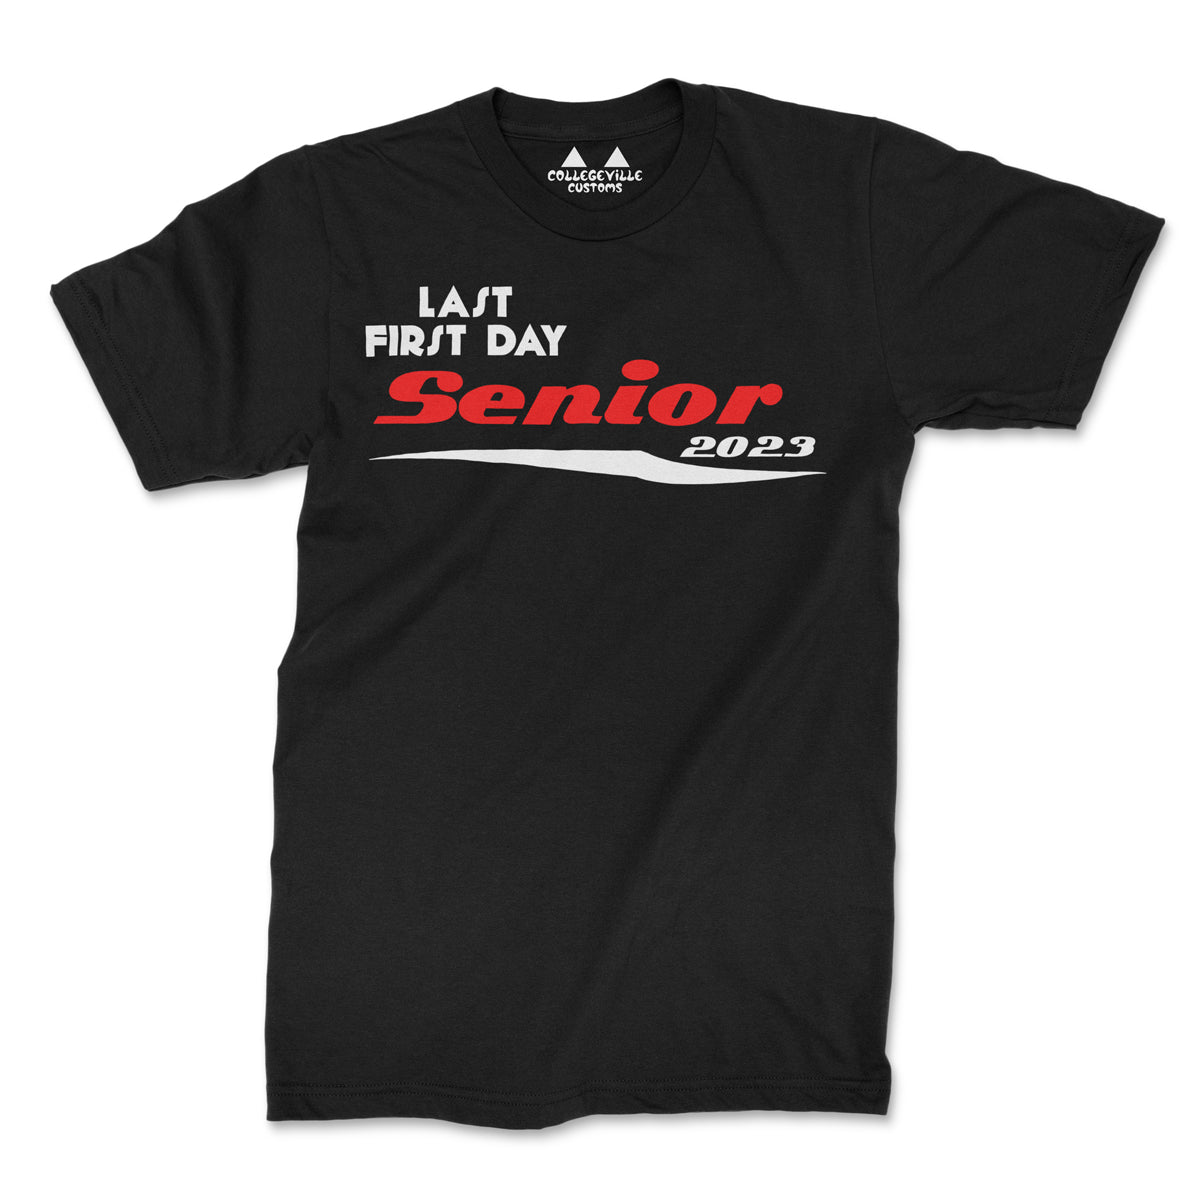 LAST FIRST DAY Senior 2023 Shirt